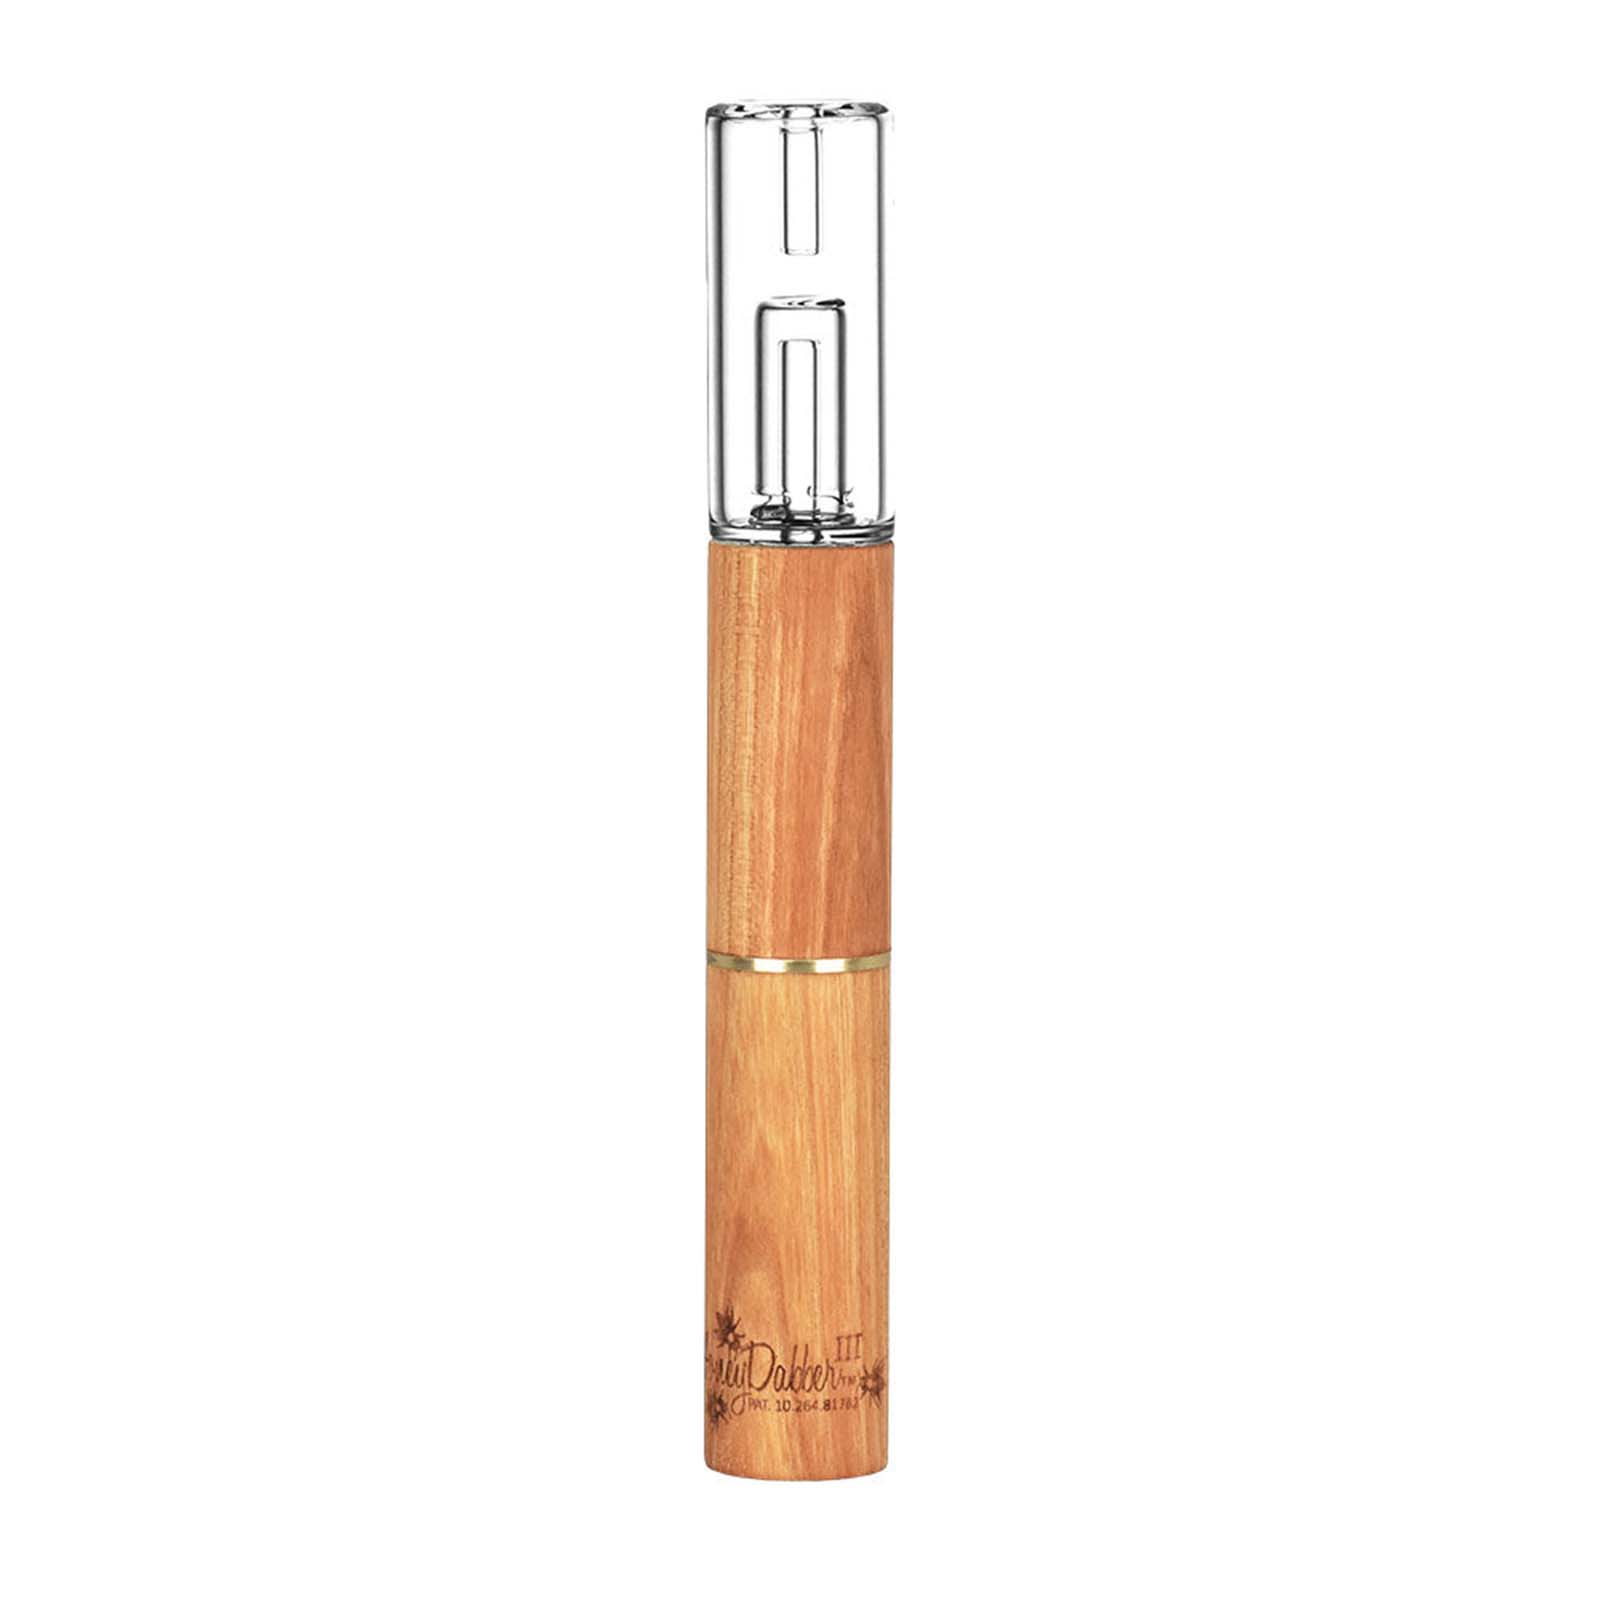 HoneyDabber 3 Vapor Straw - 6.25" Cherry Wood